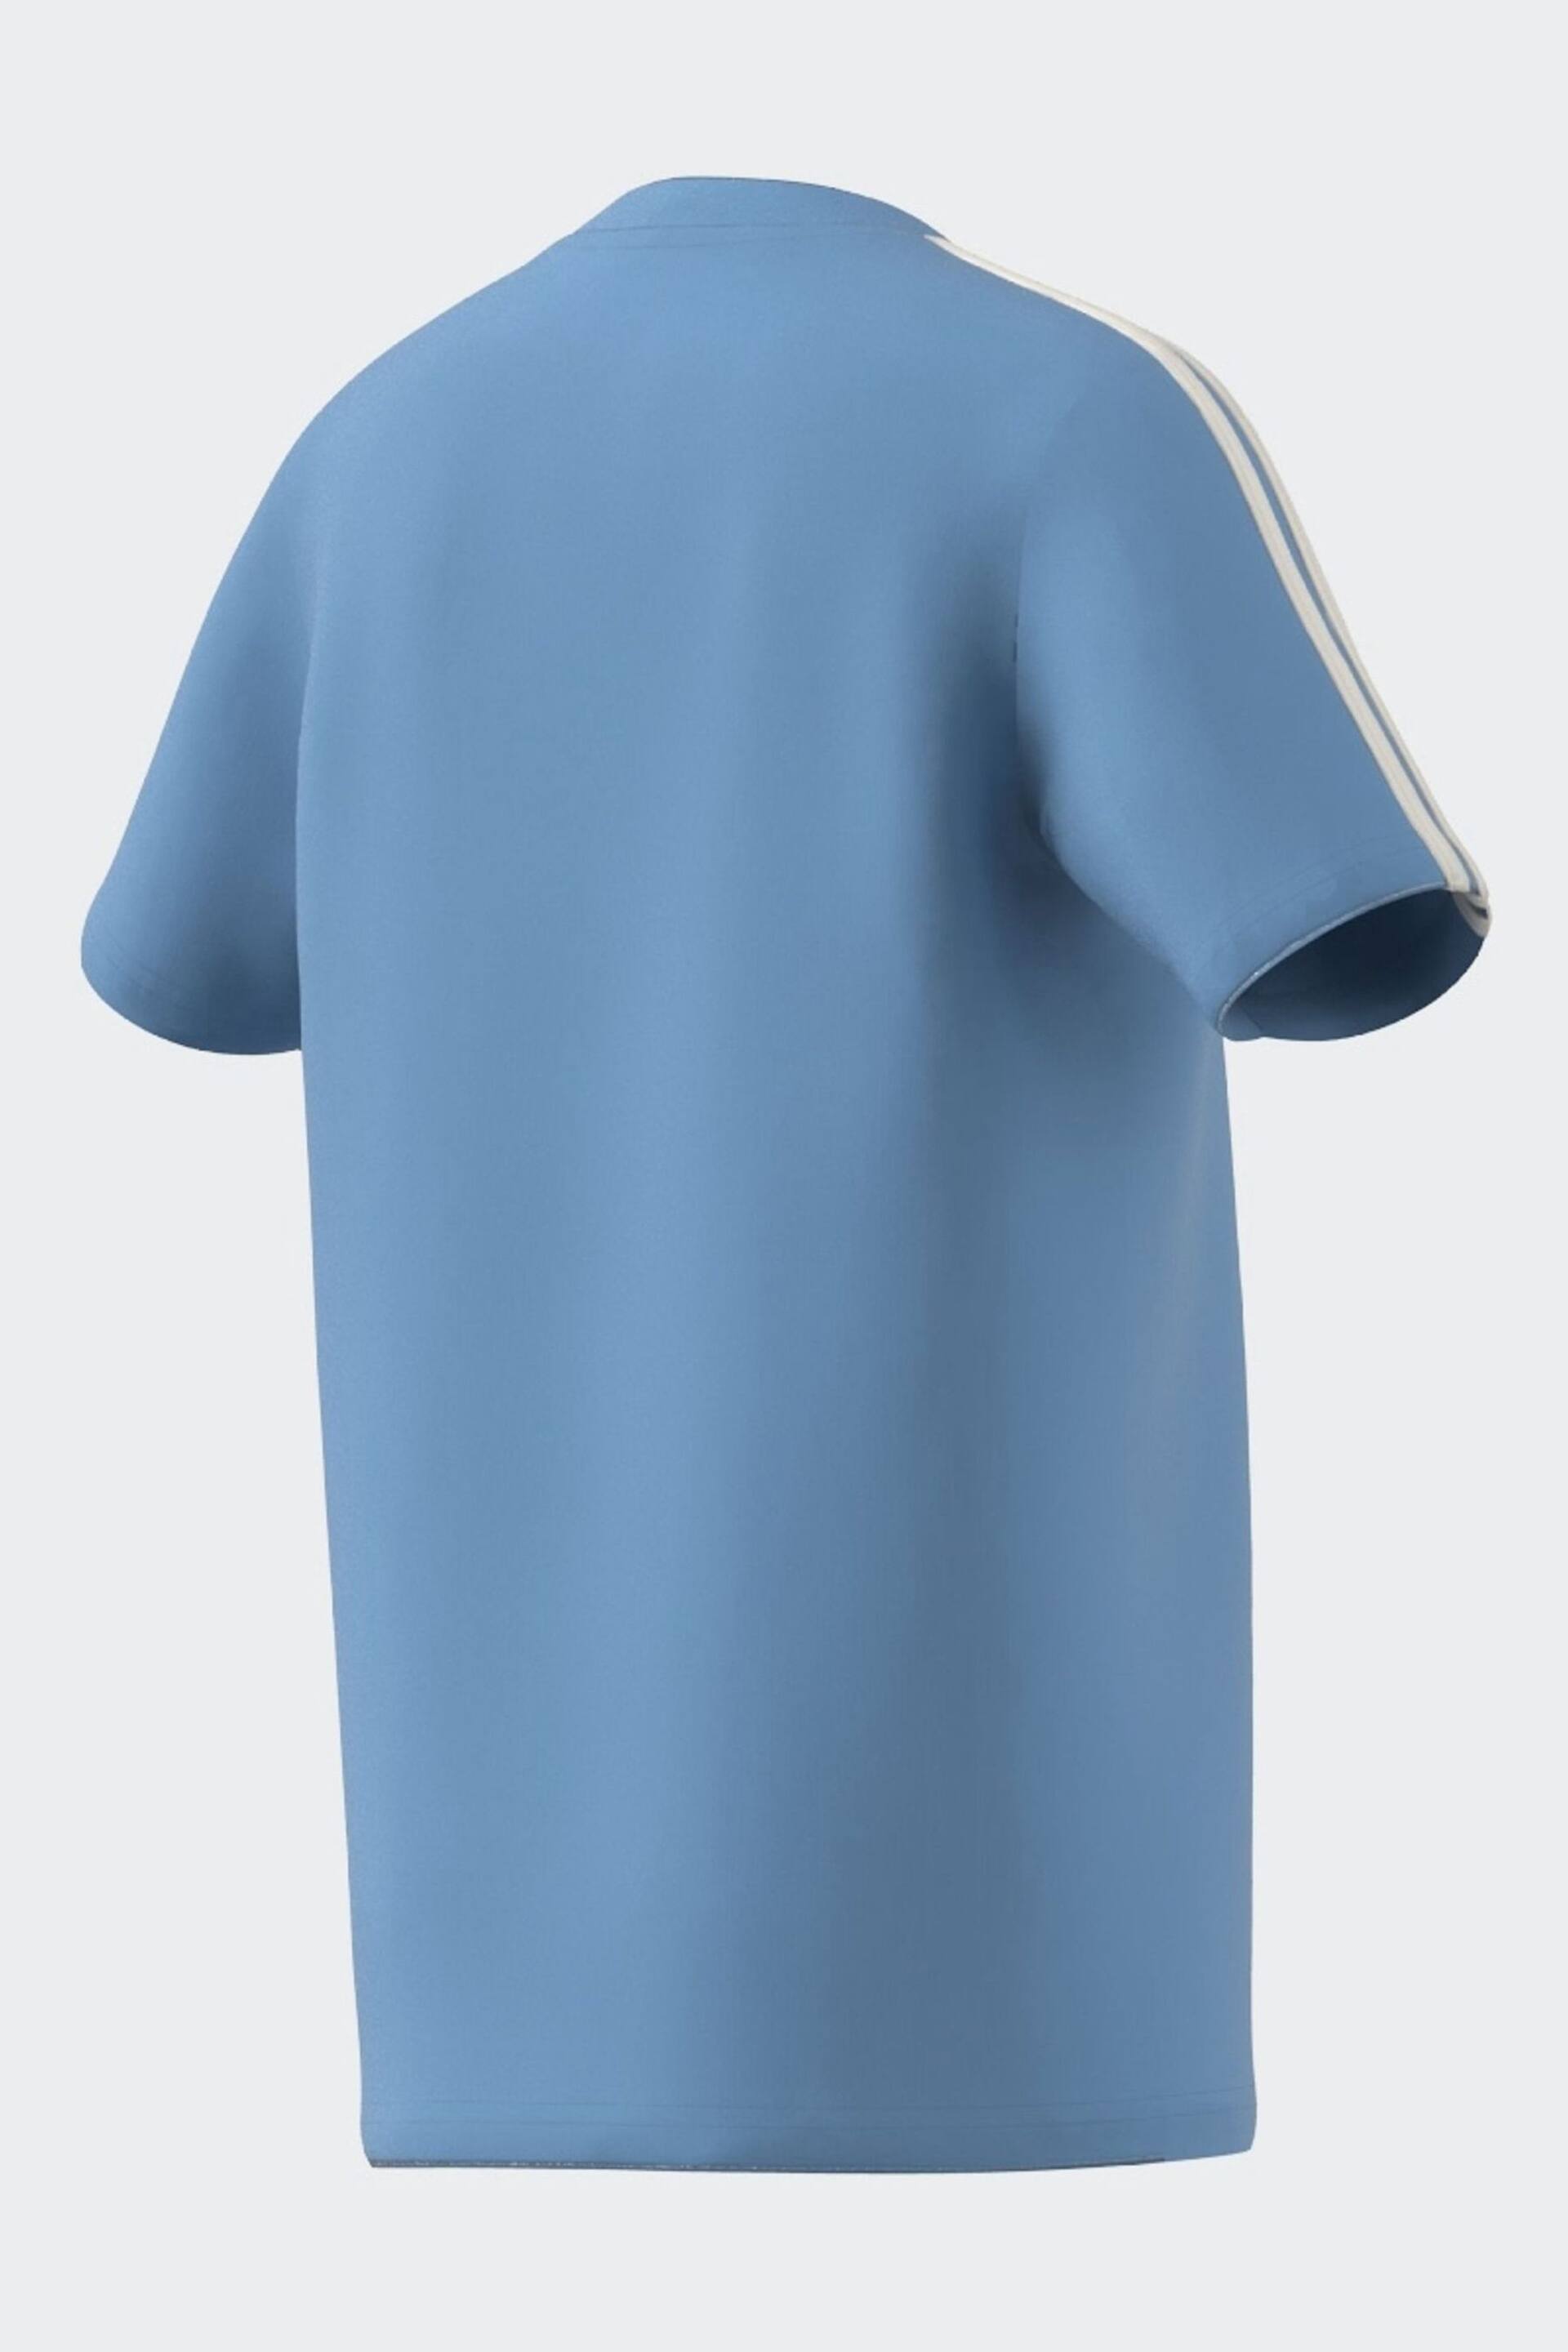 adidas Navy Blue Essentials 3-Stripes Cotton T-Shirt - Image 15 of 16